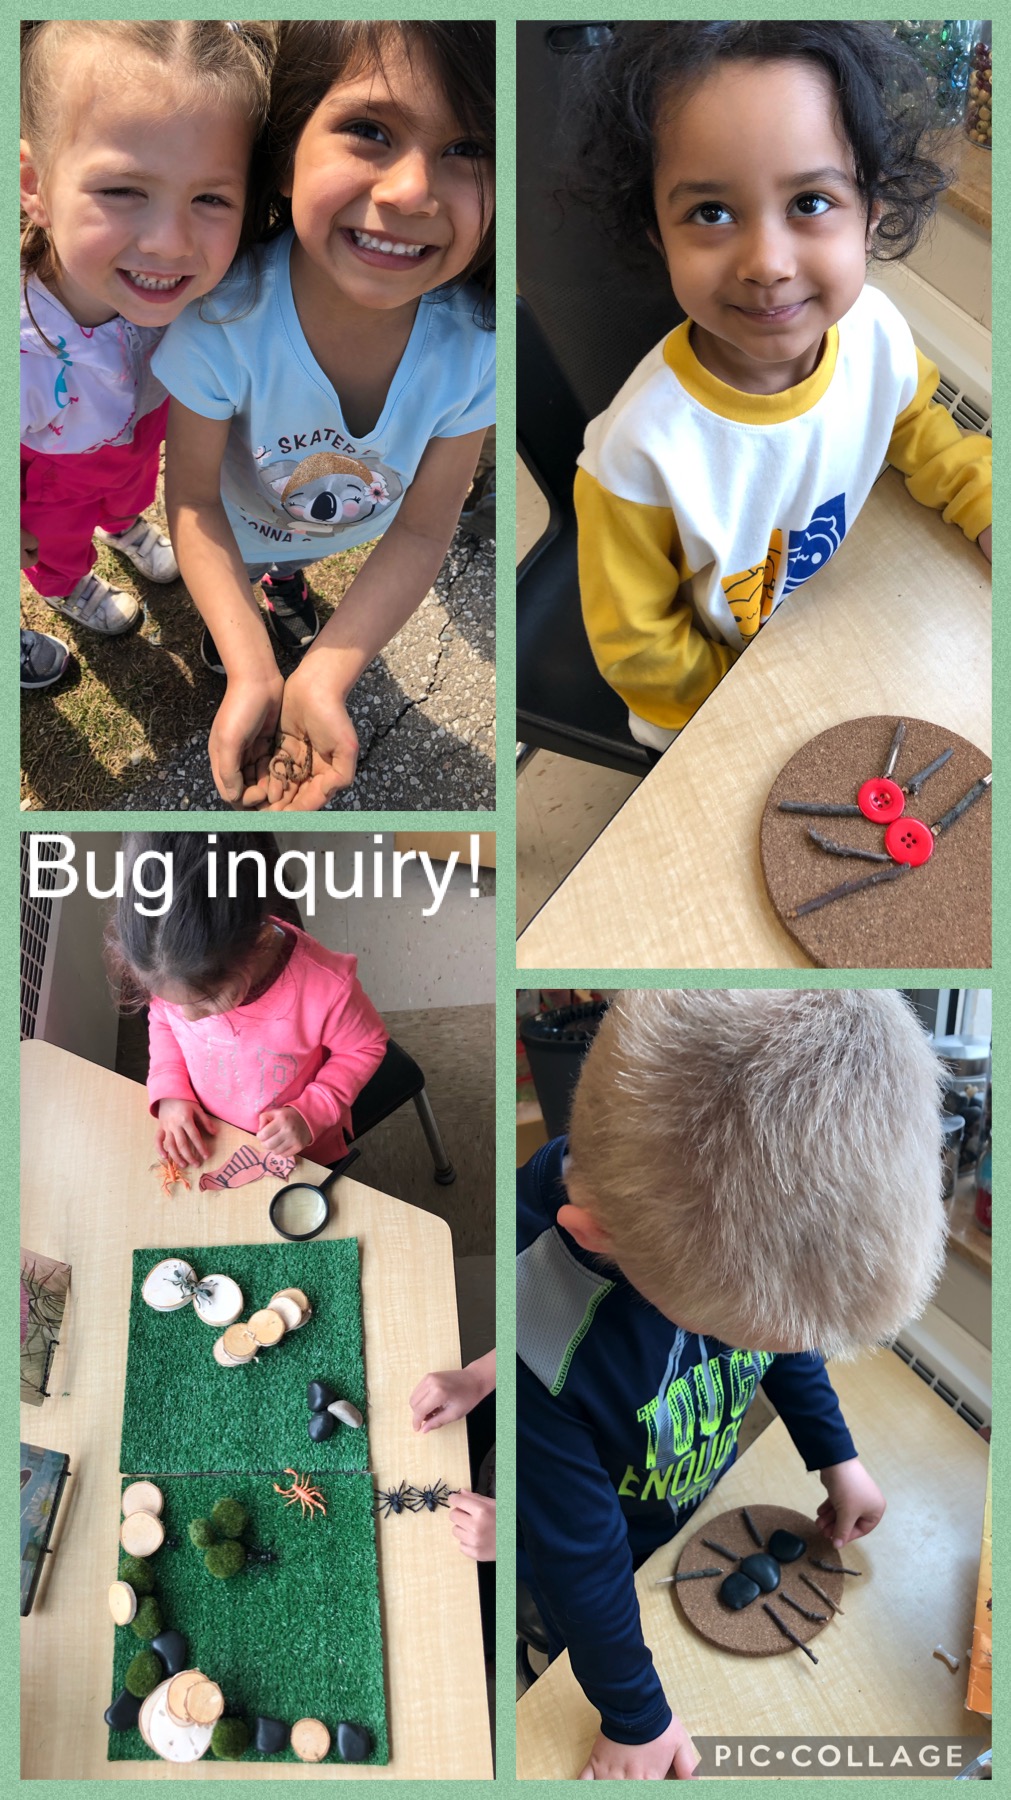 Kindergarten children investigating bugs for science inquiry